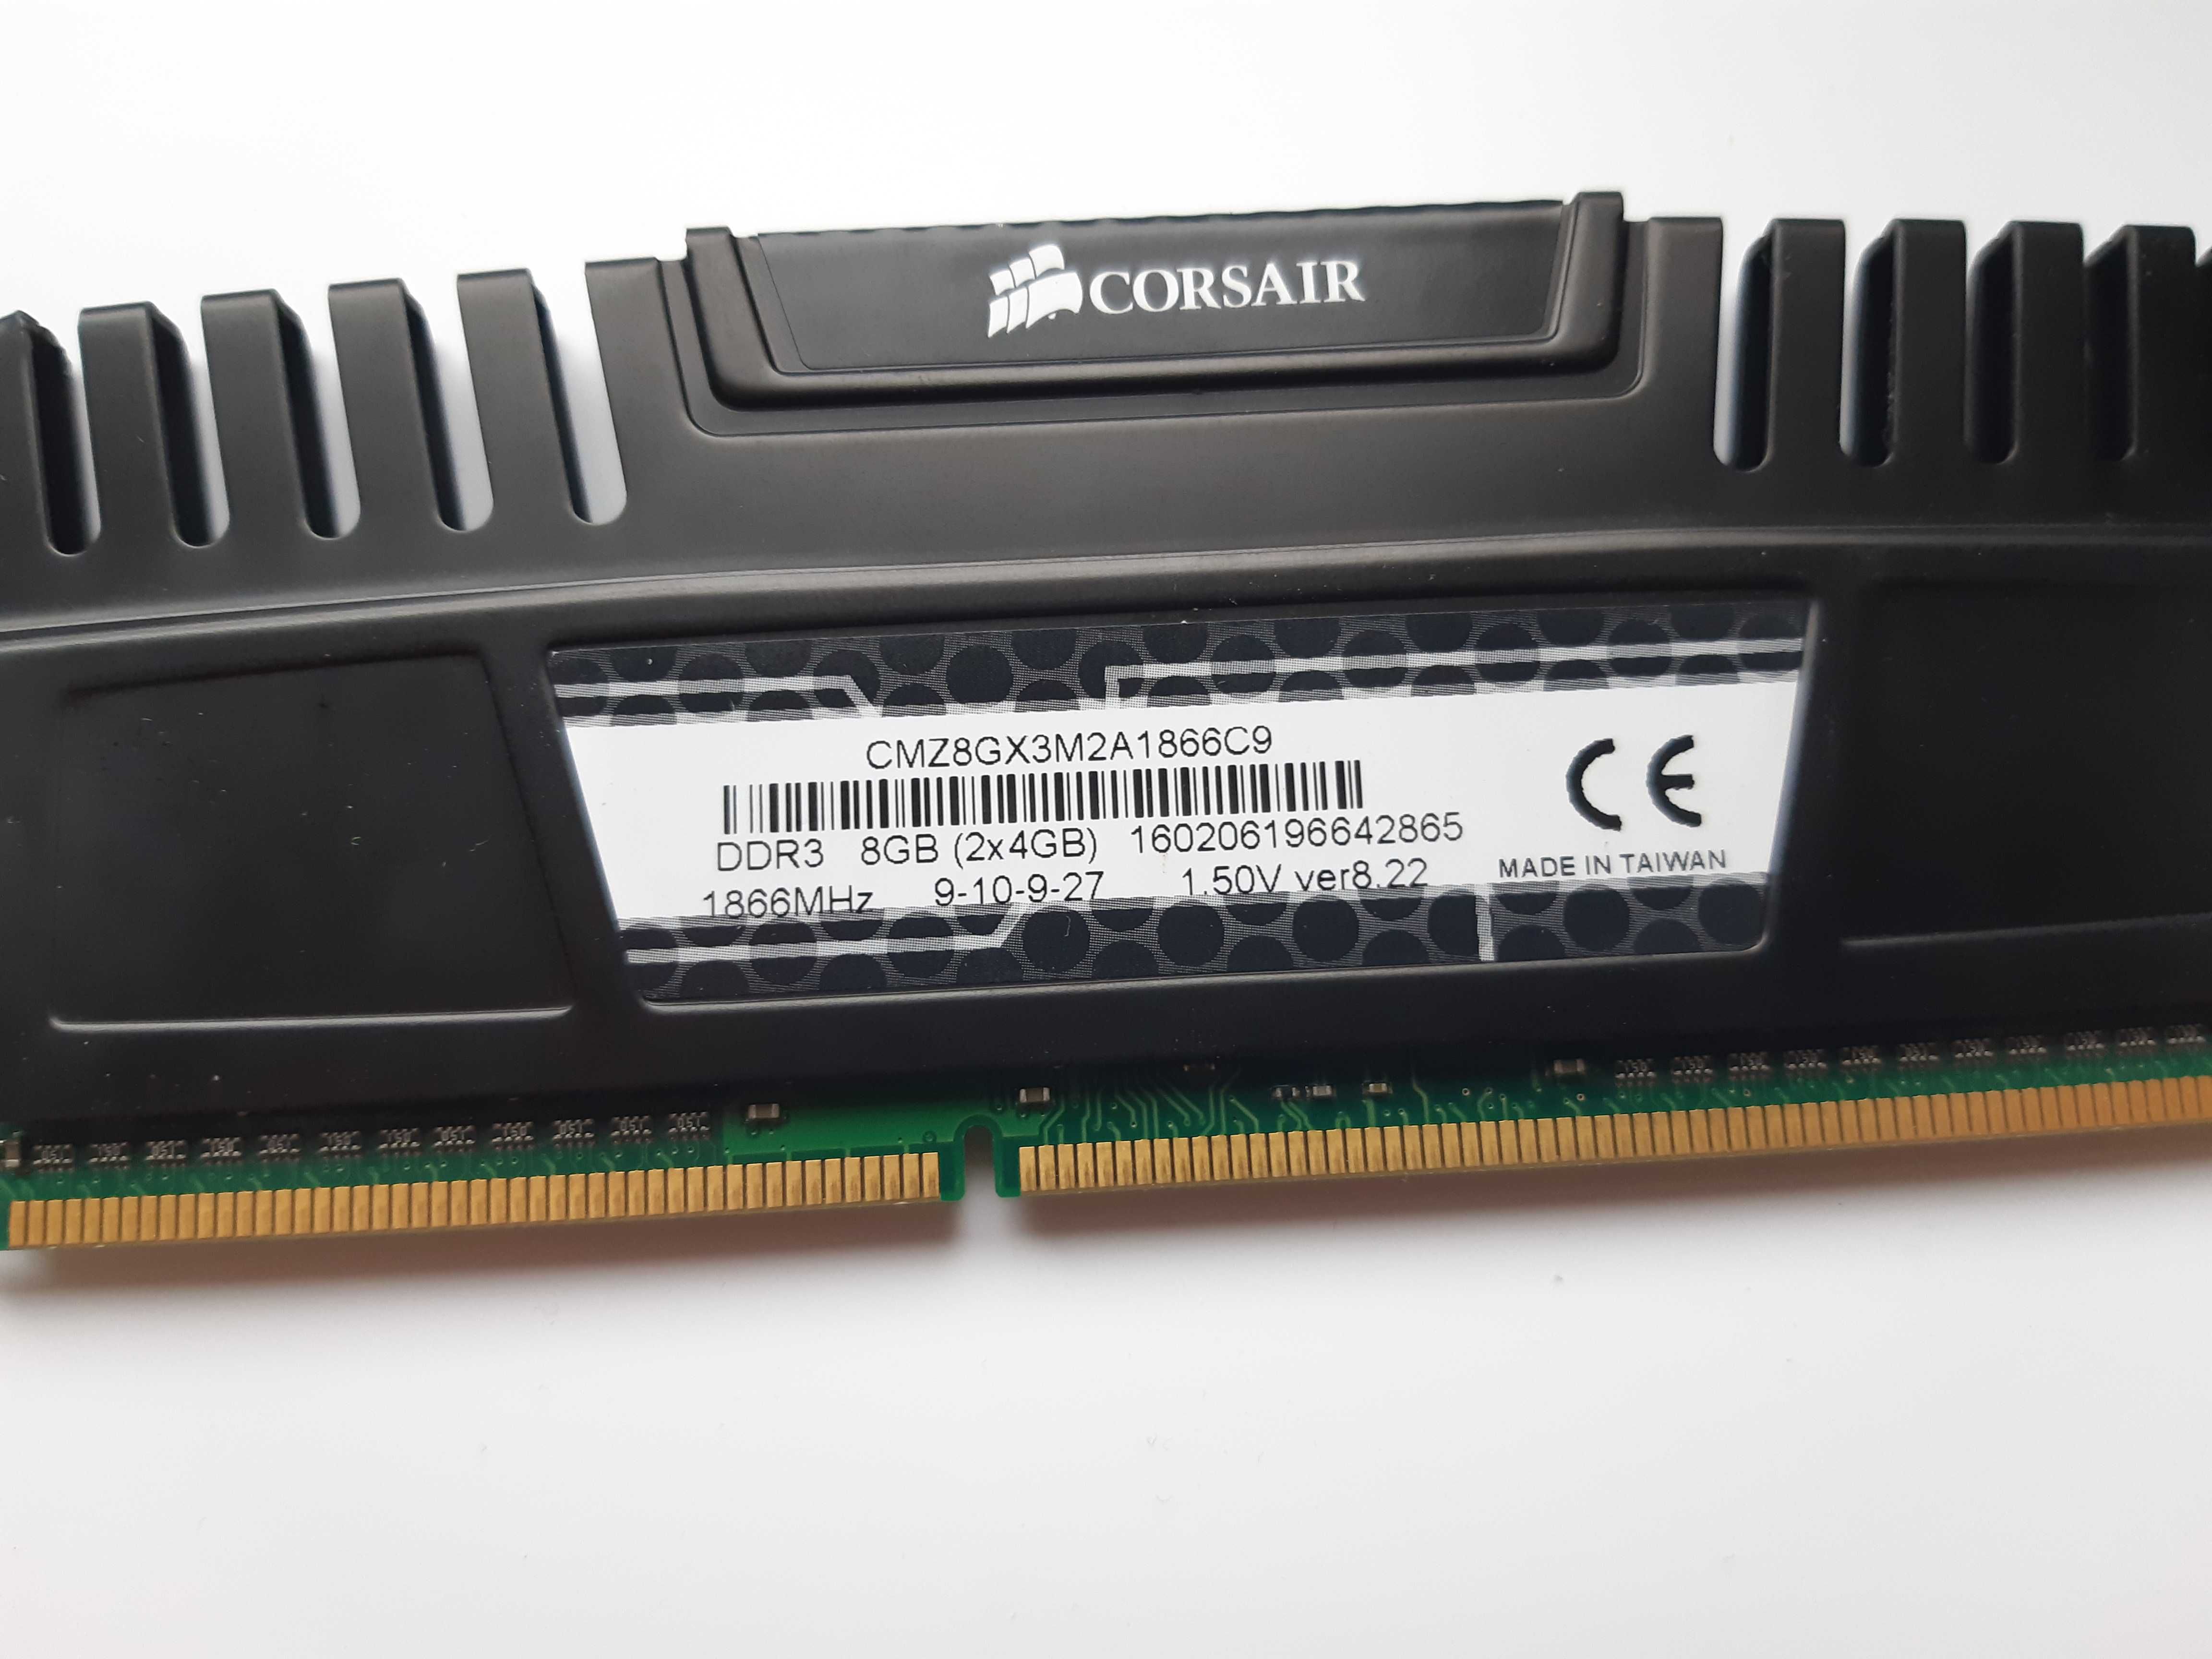 Pamięć RAM 4GB DDR3 1866MHz CL9 Corsair Vengeance